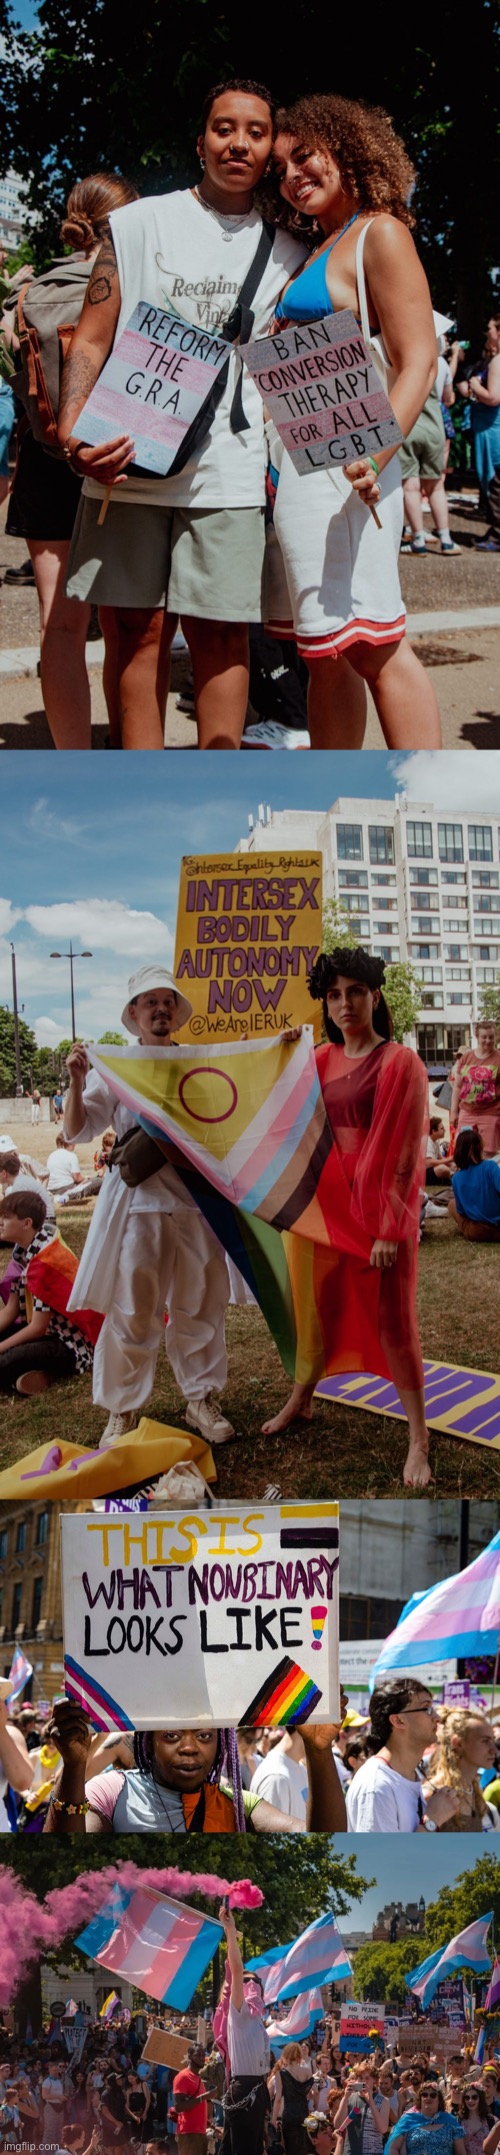 trans pride in london last july! | made w/ Imgflip meme maker